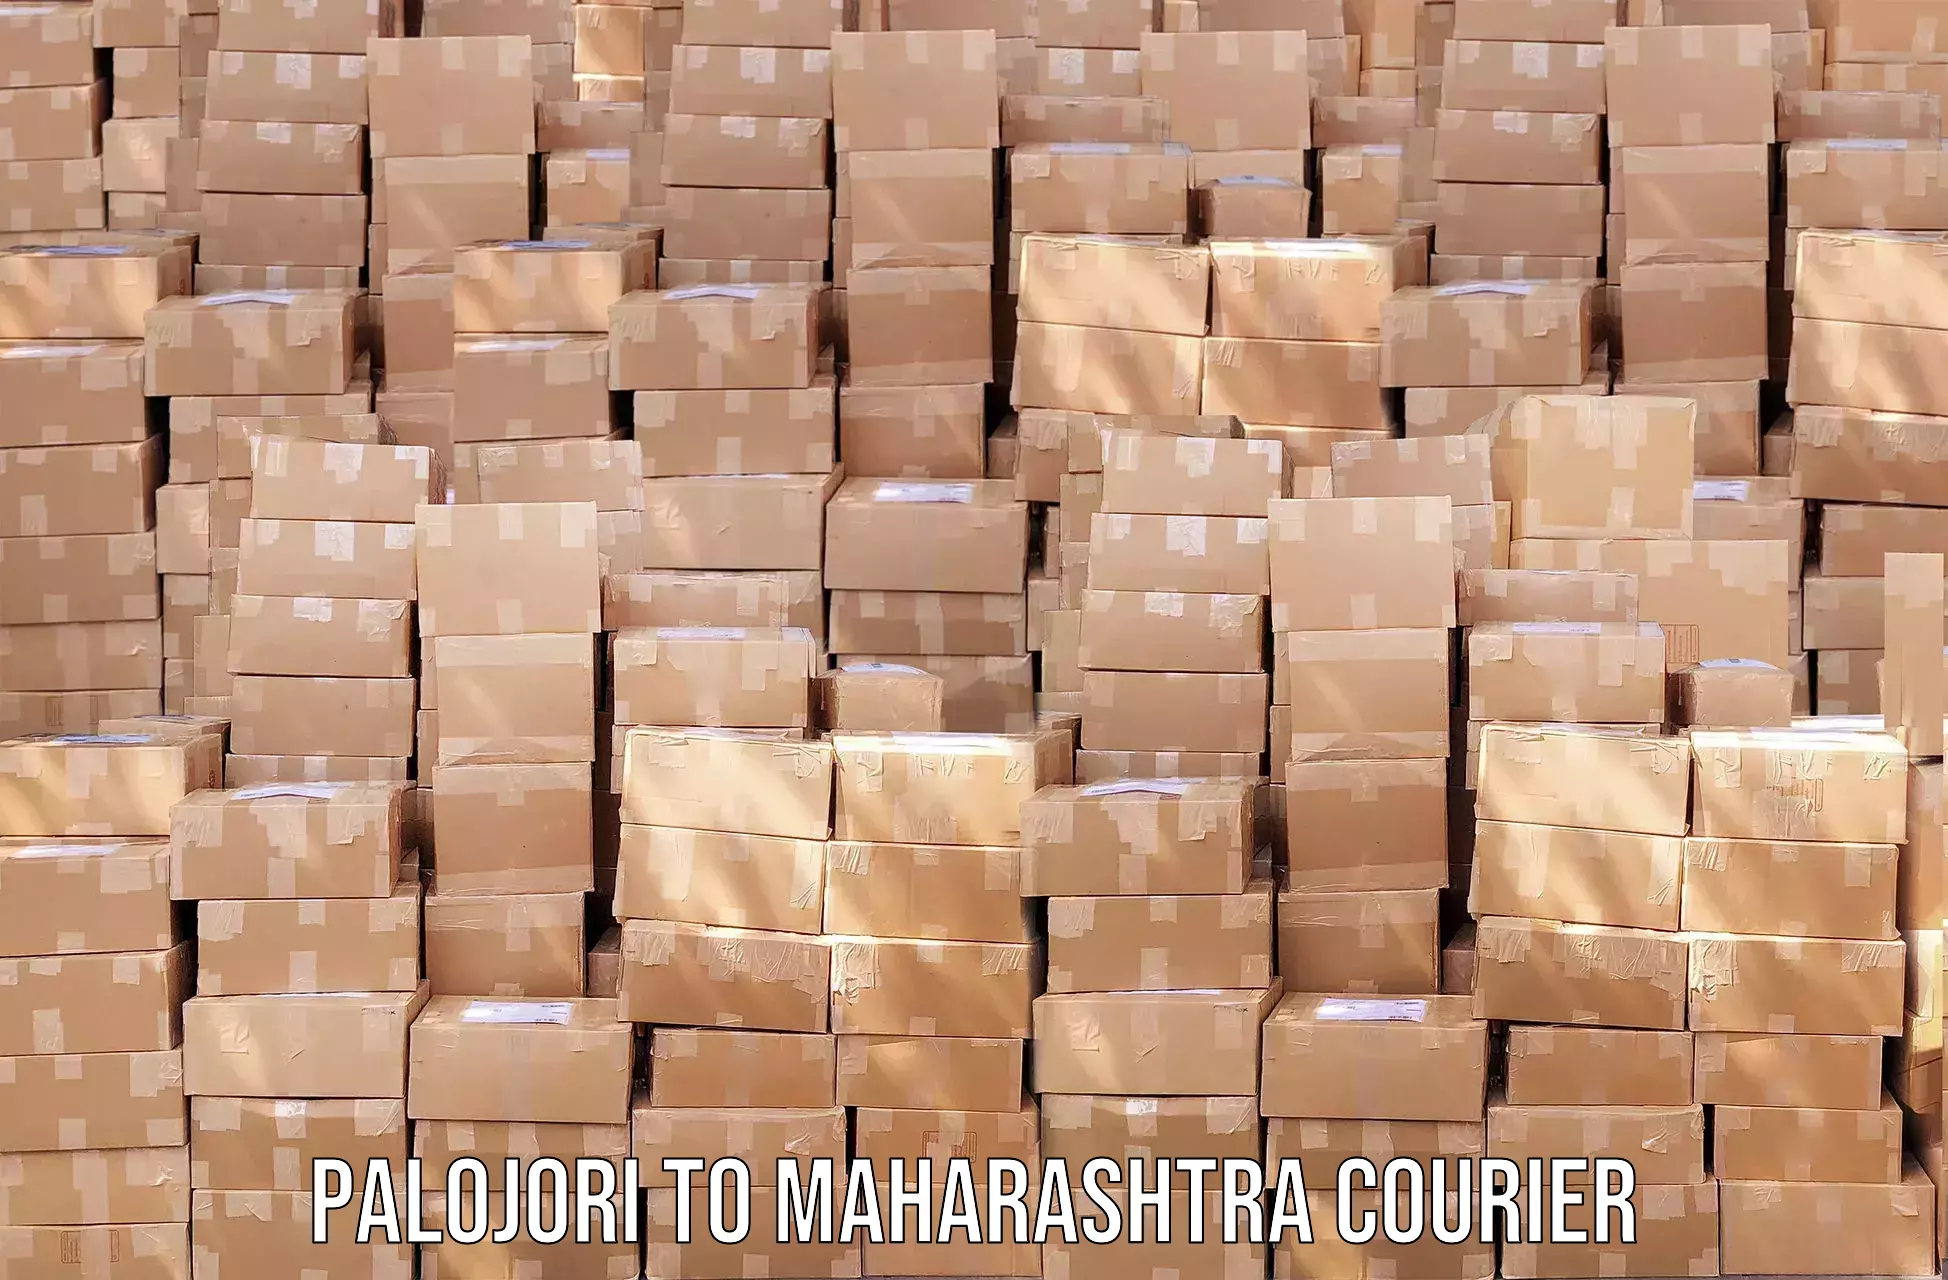 Pharmaceutical courier Palojori to Shivajinagar